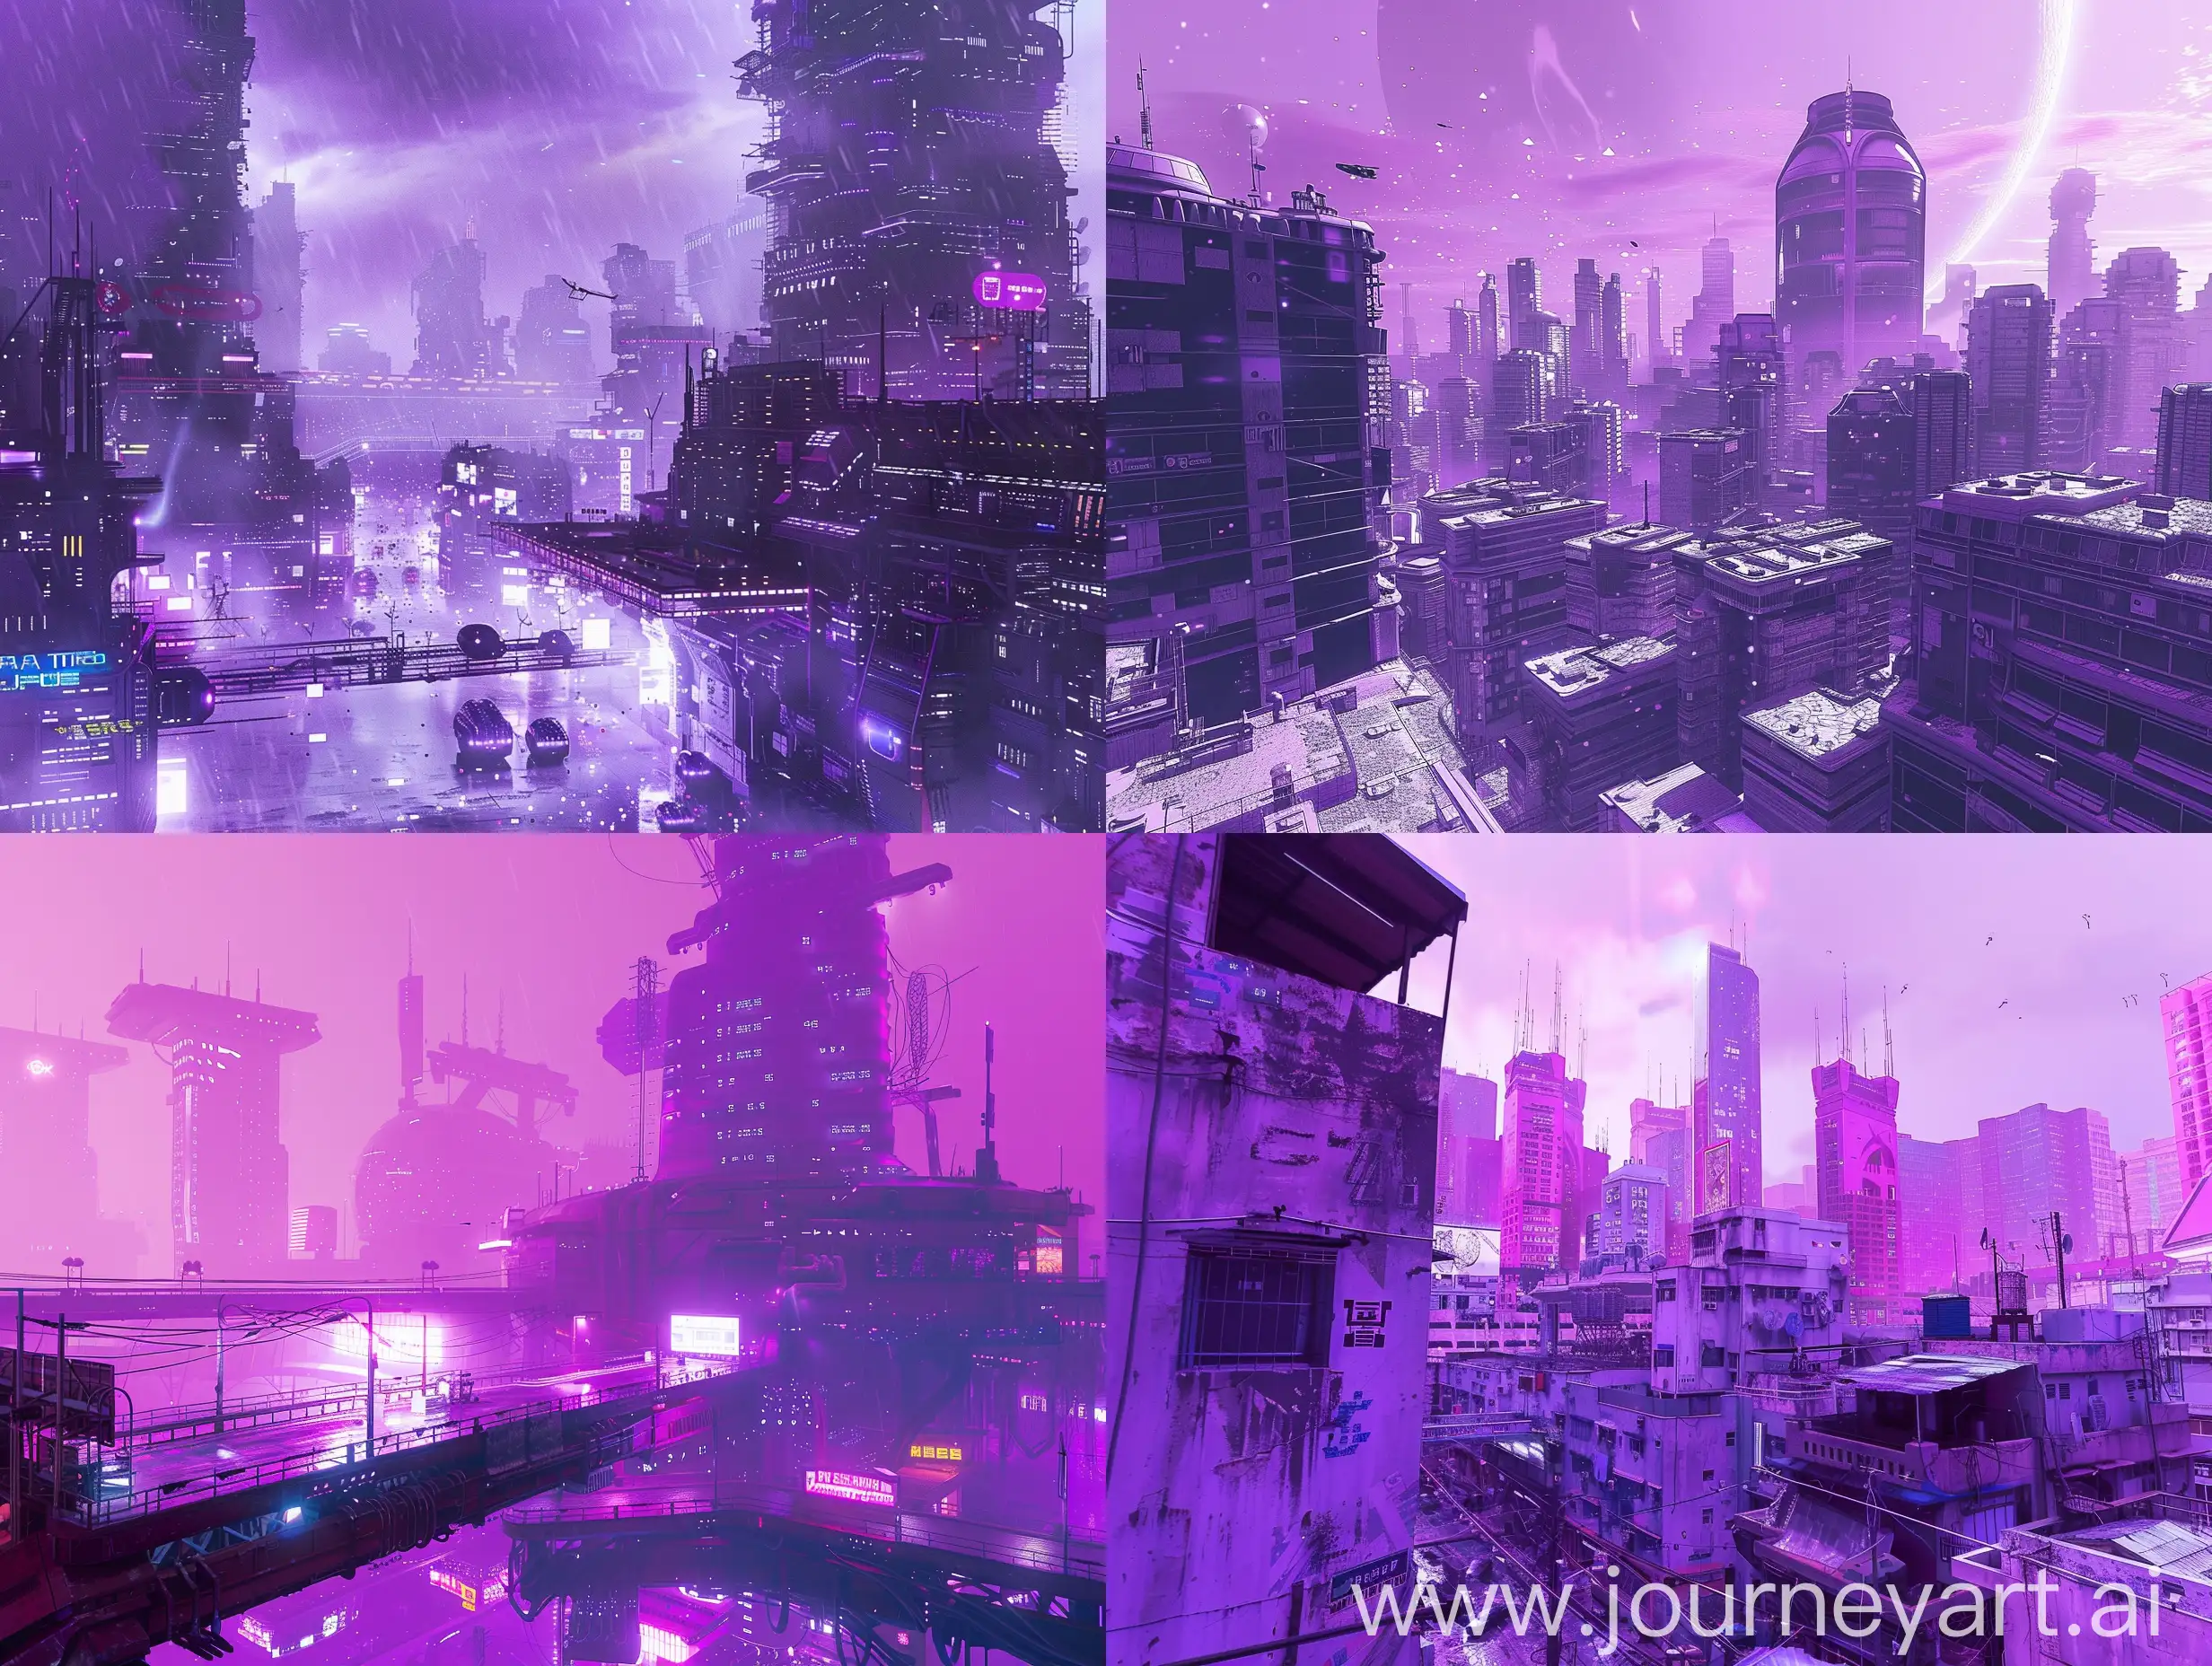 A CYBERPUNK CITY, purple, day time

